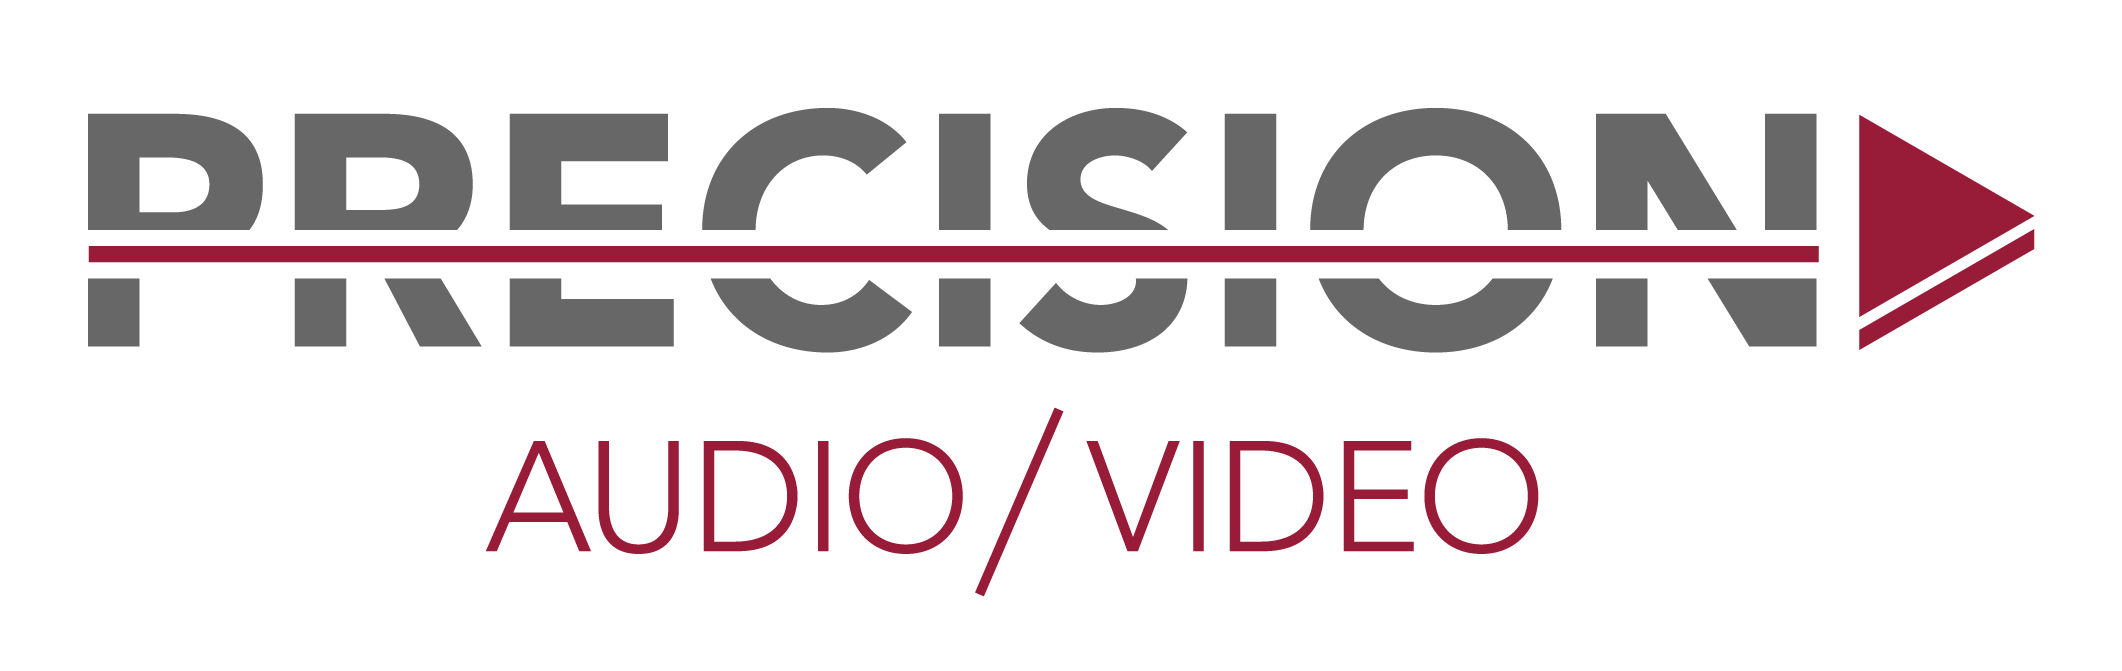 Precision Audio/Video Logo